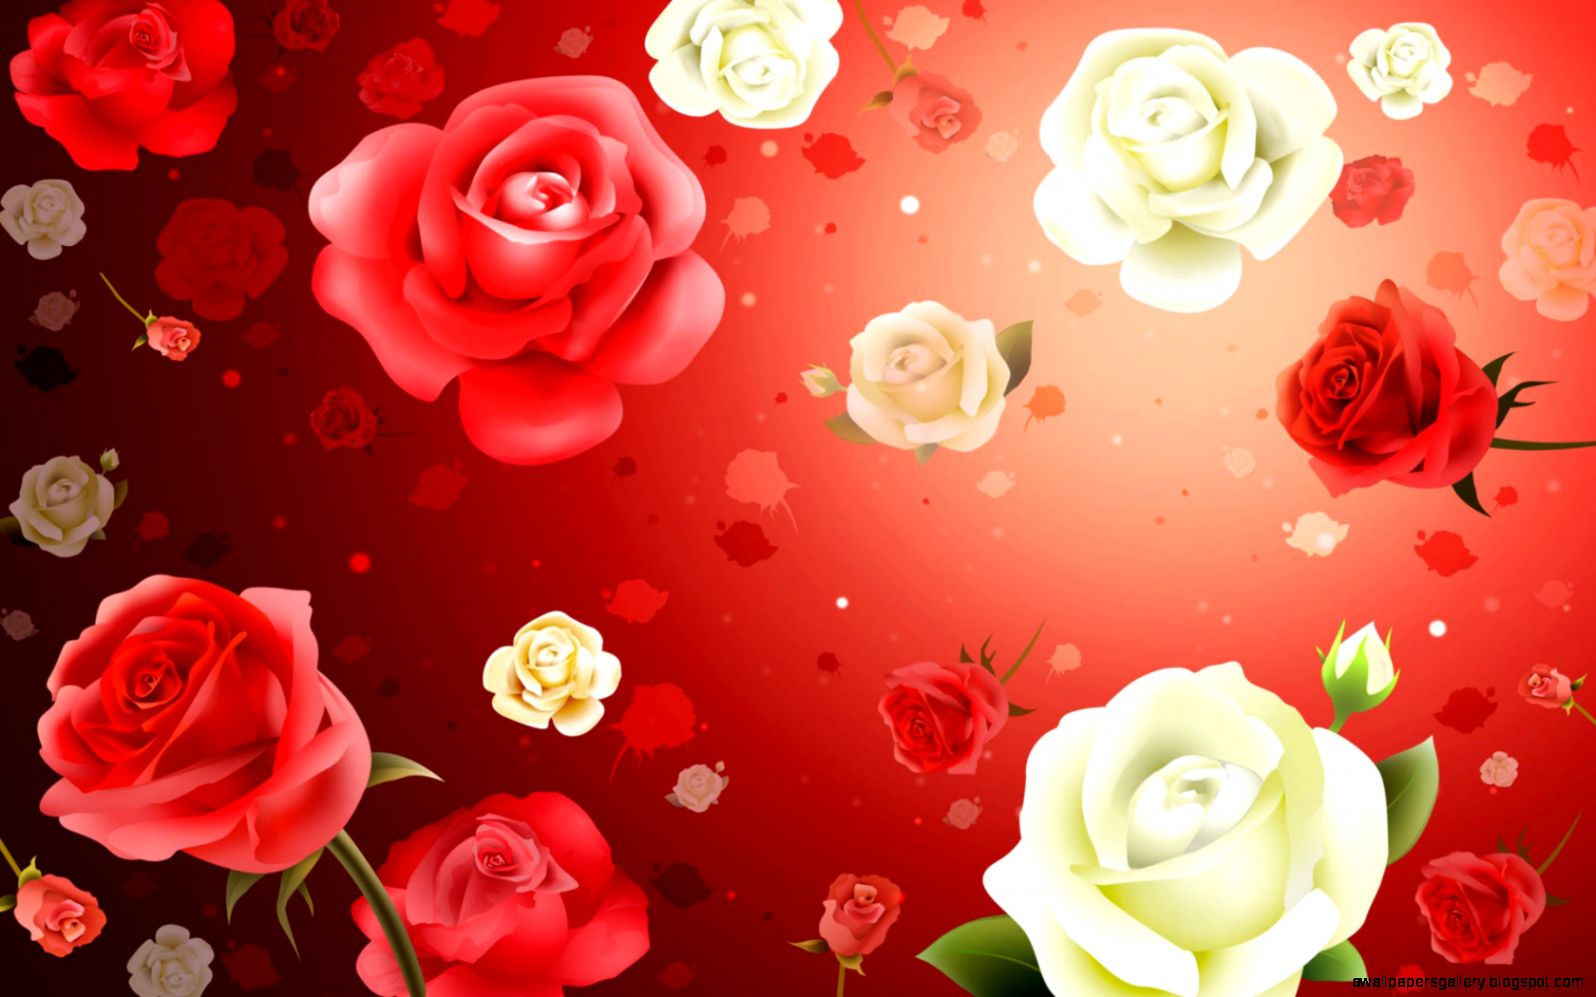 Rose Flower Wallpapers